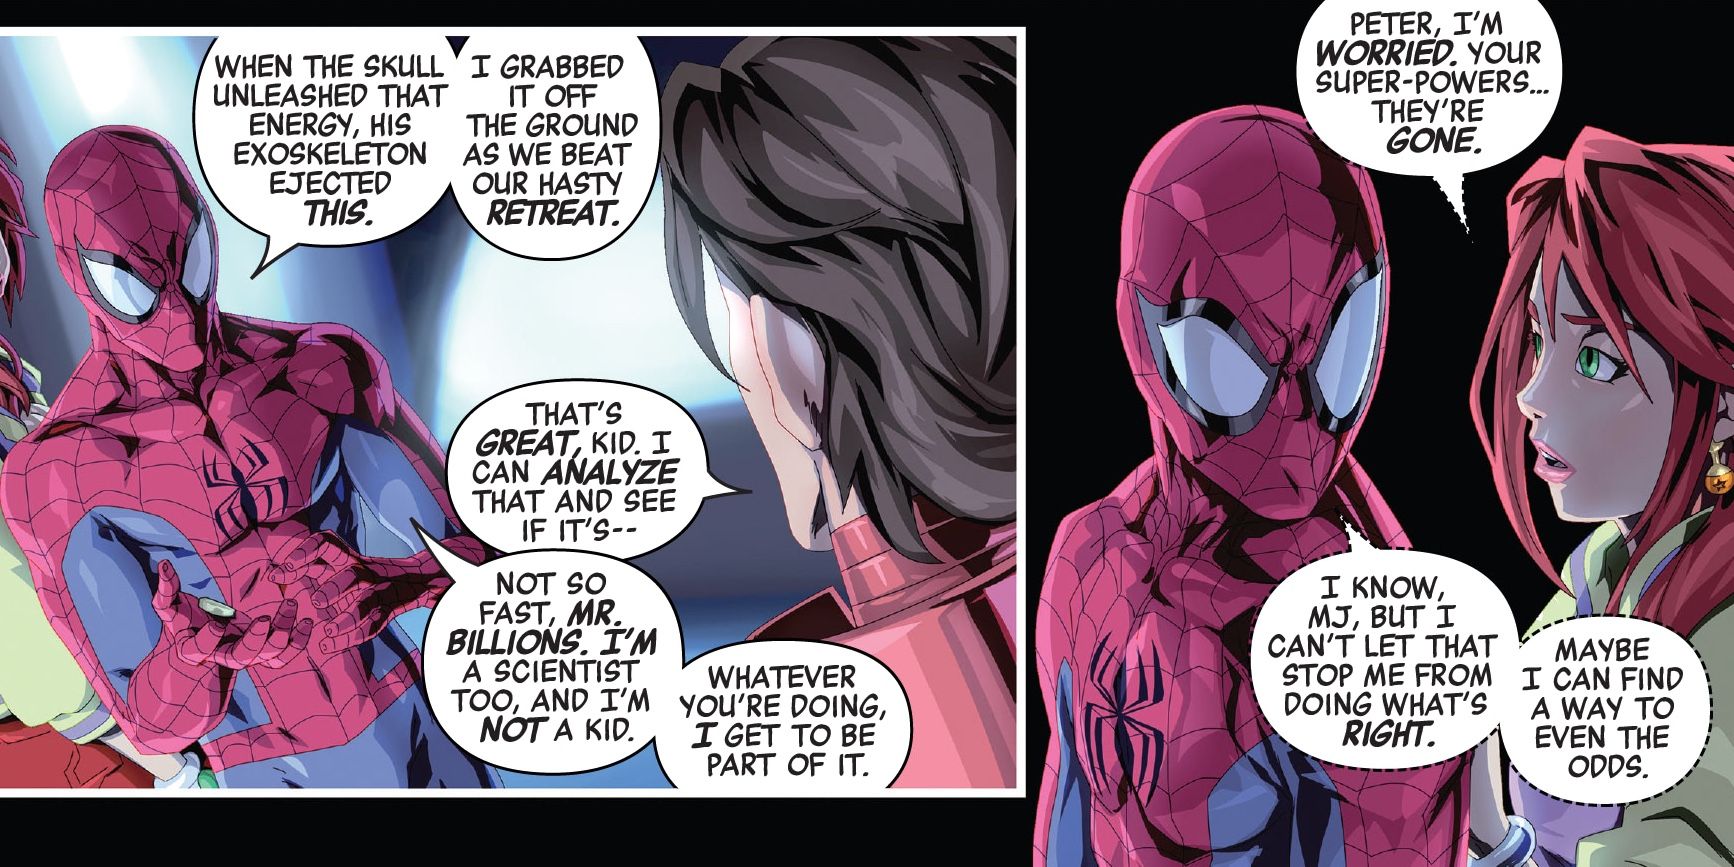 Tech On Spider-Man sasses Iron Man